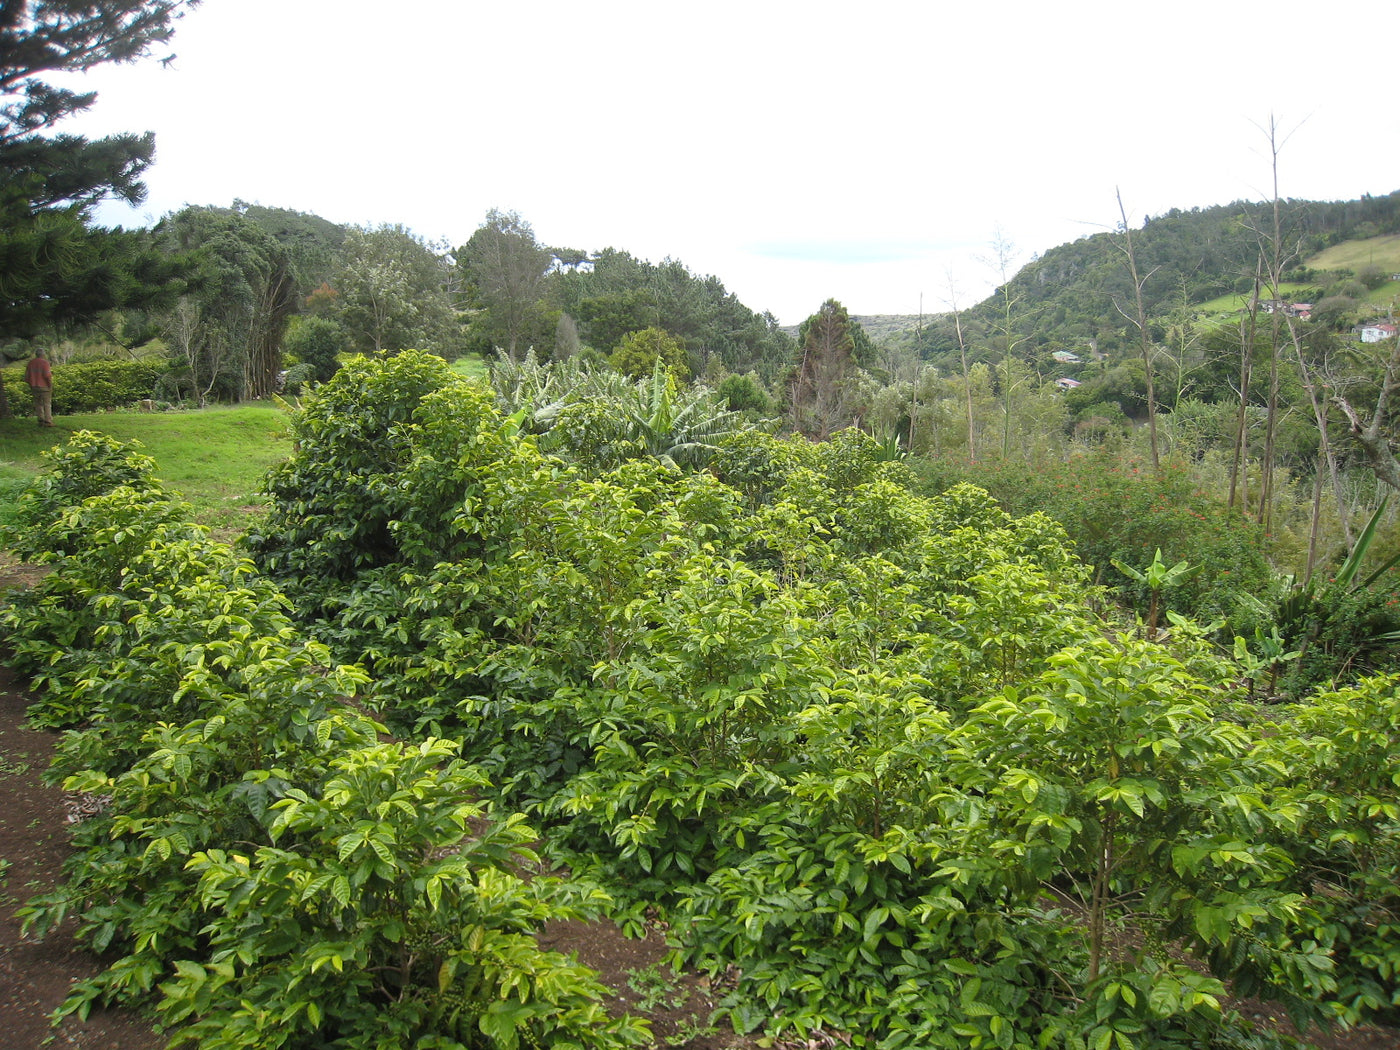 Coffee plants growing at Wranghams estate farm in St Helena